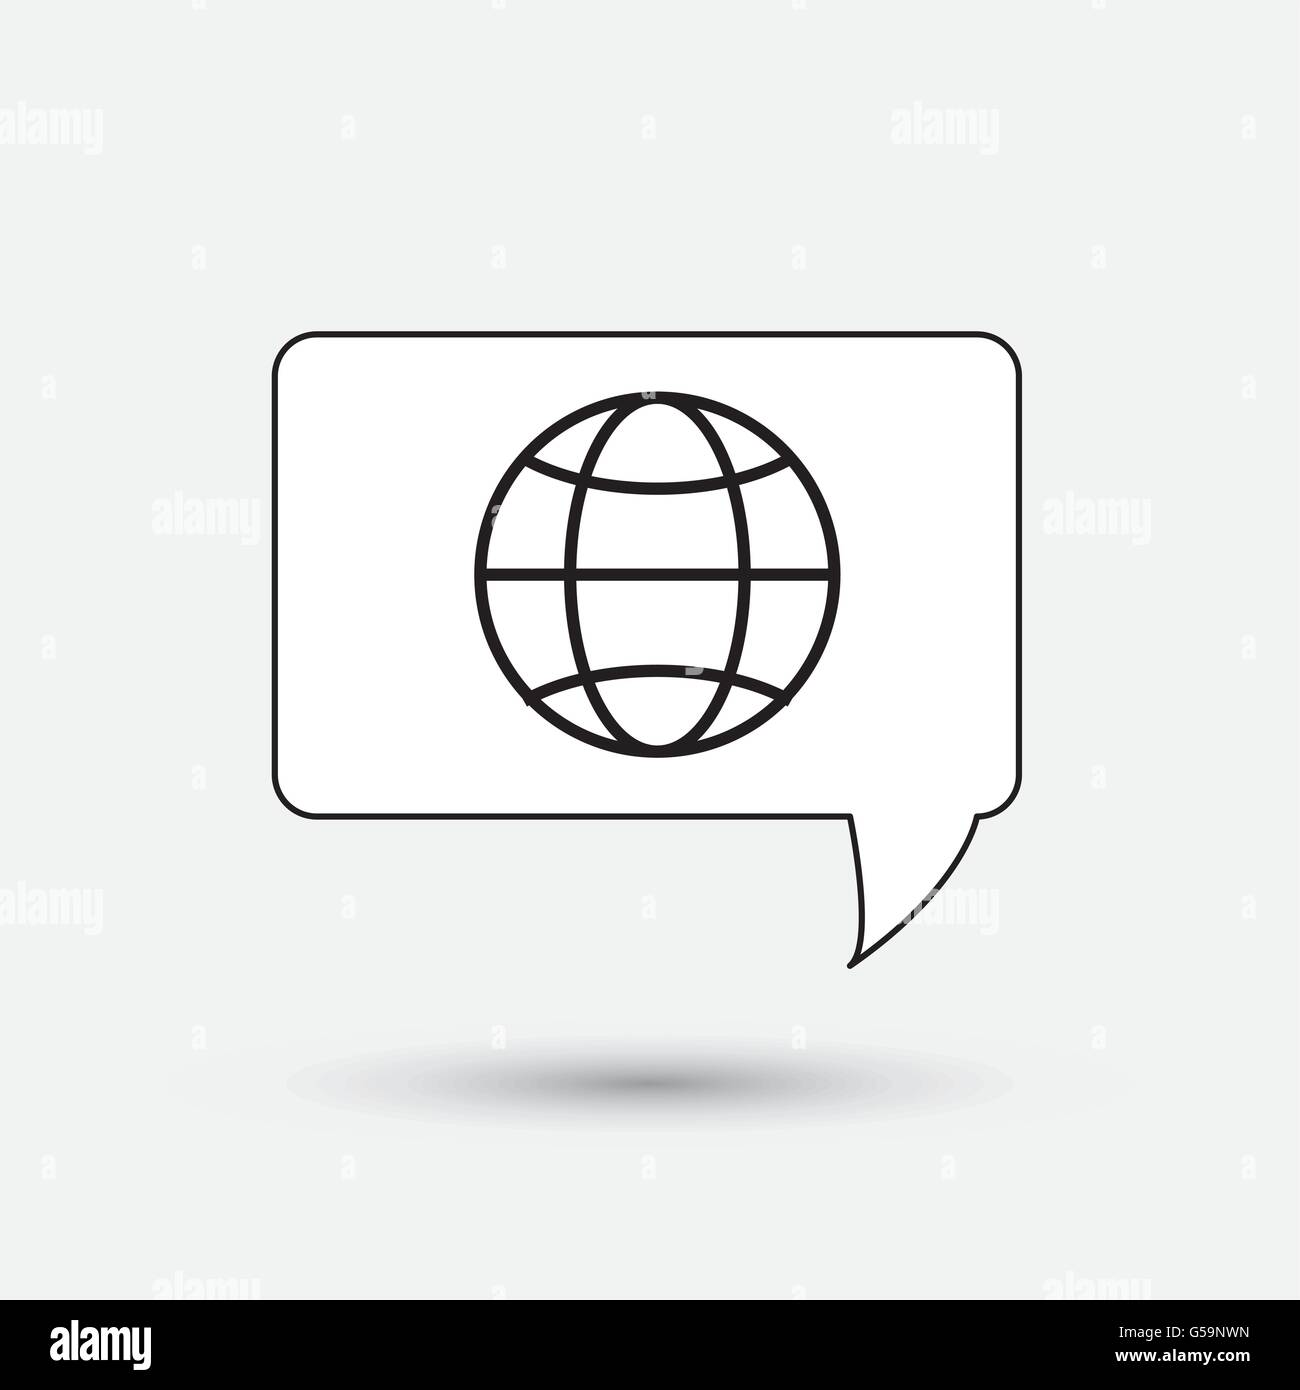 Geschäft design.Communication Symbol. Farbenfrohe Illustration, vect Stock Vektor